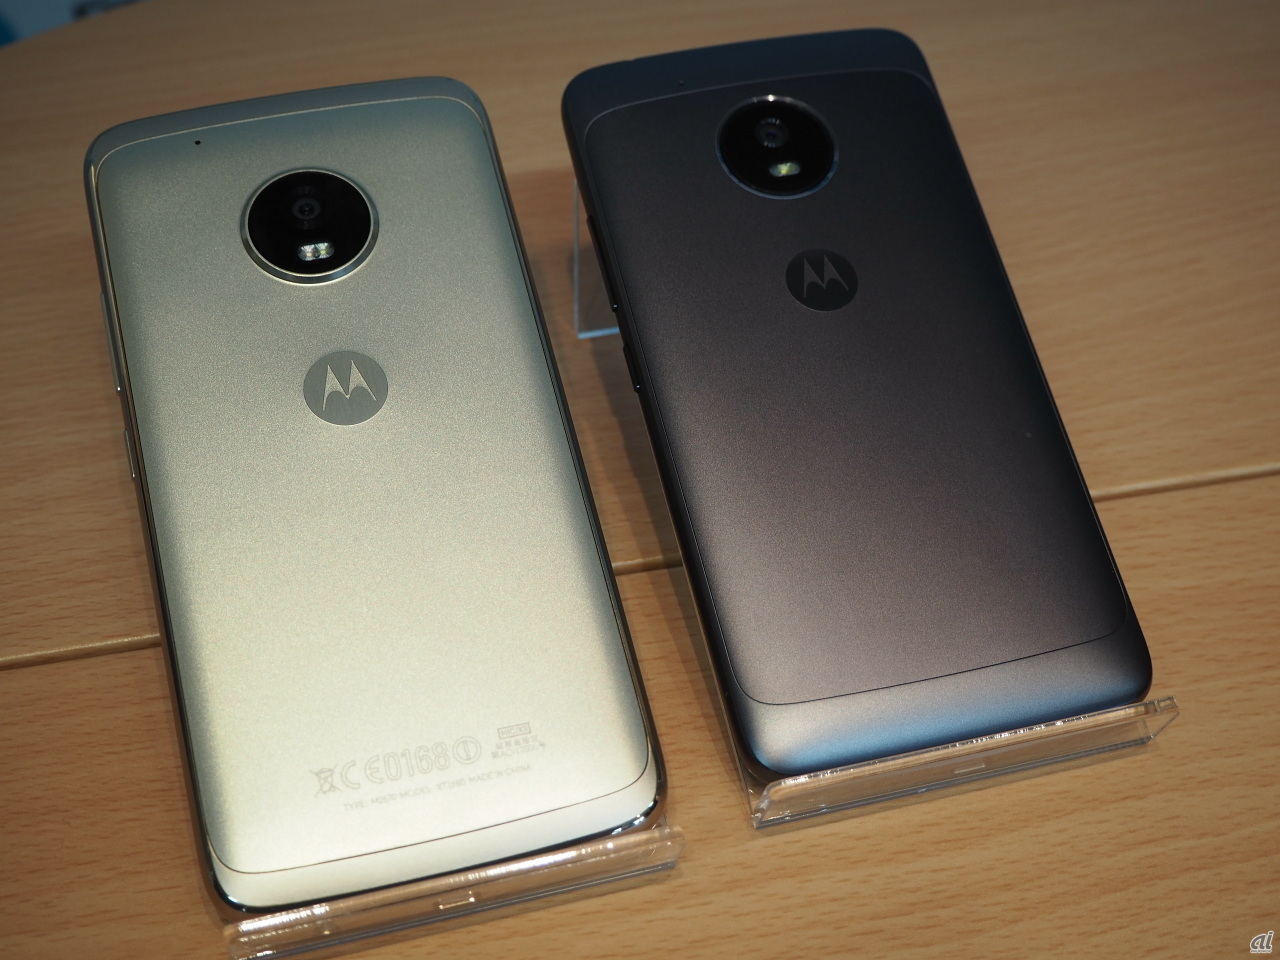 「Moto G5 Plus」（左）と「Moto G5」（右）。デザインは似ているが、大きさとカメラ部分の突起が異なる